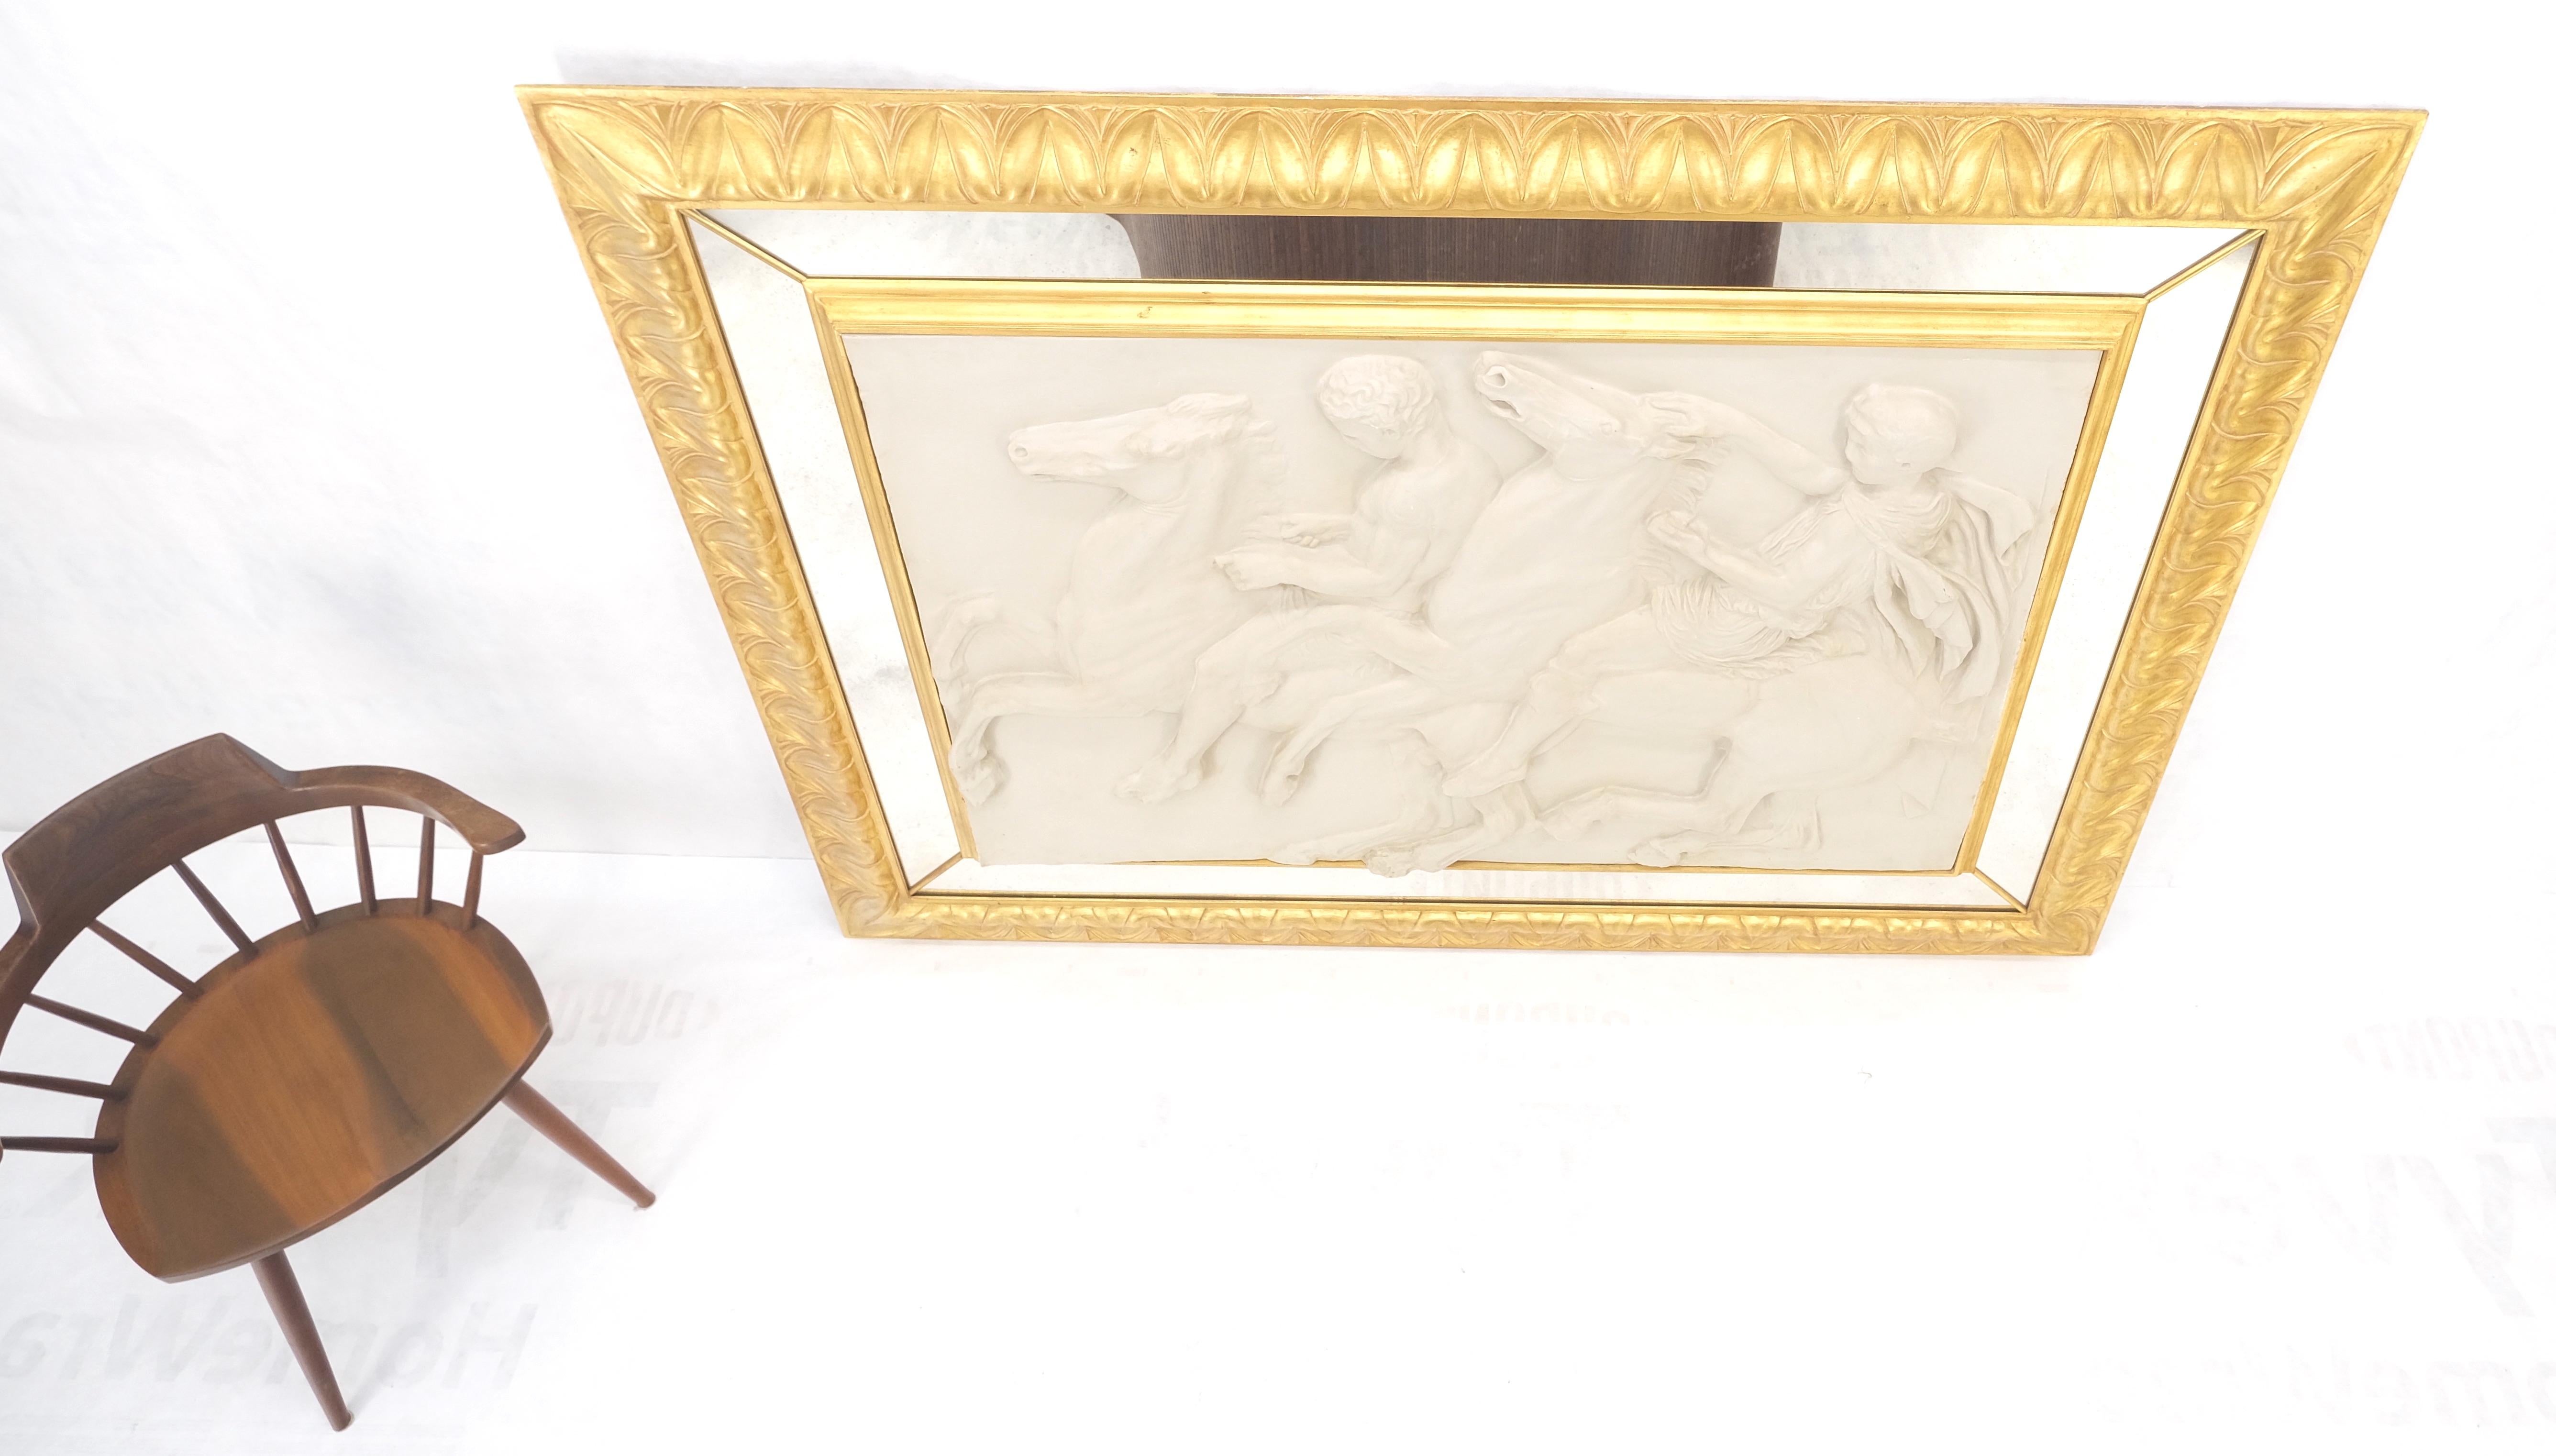 Large Carved Alabaster Horse Riding Scene Wall Plaque In Gold Leaf Mirror Frame 6